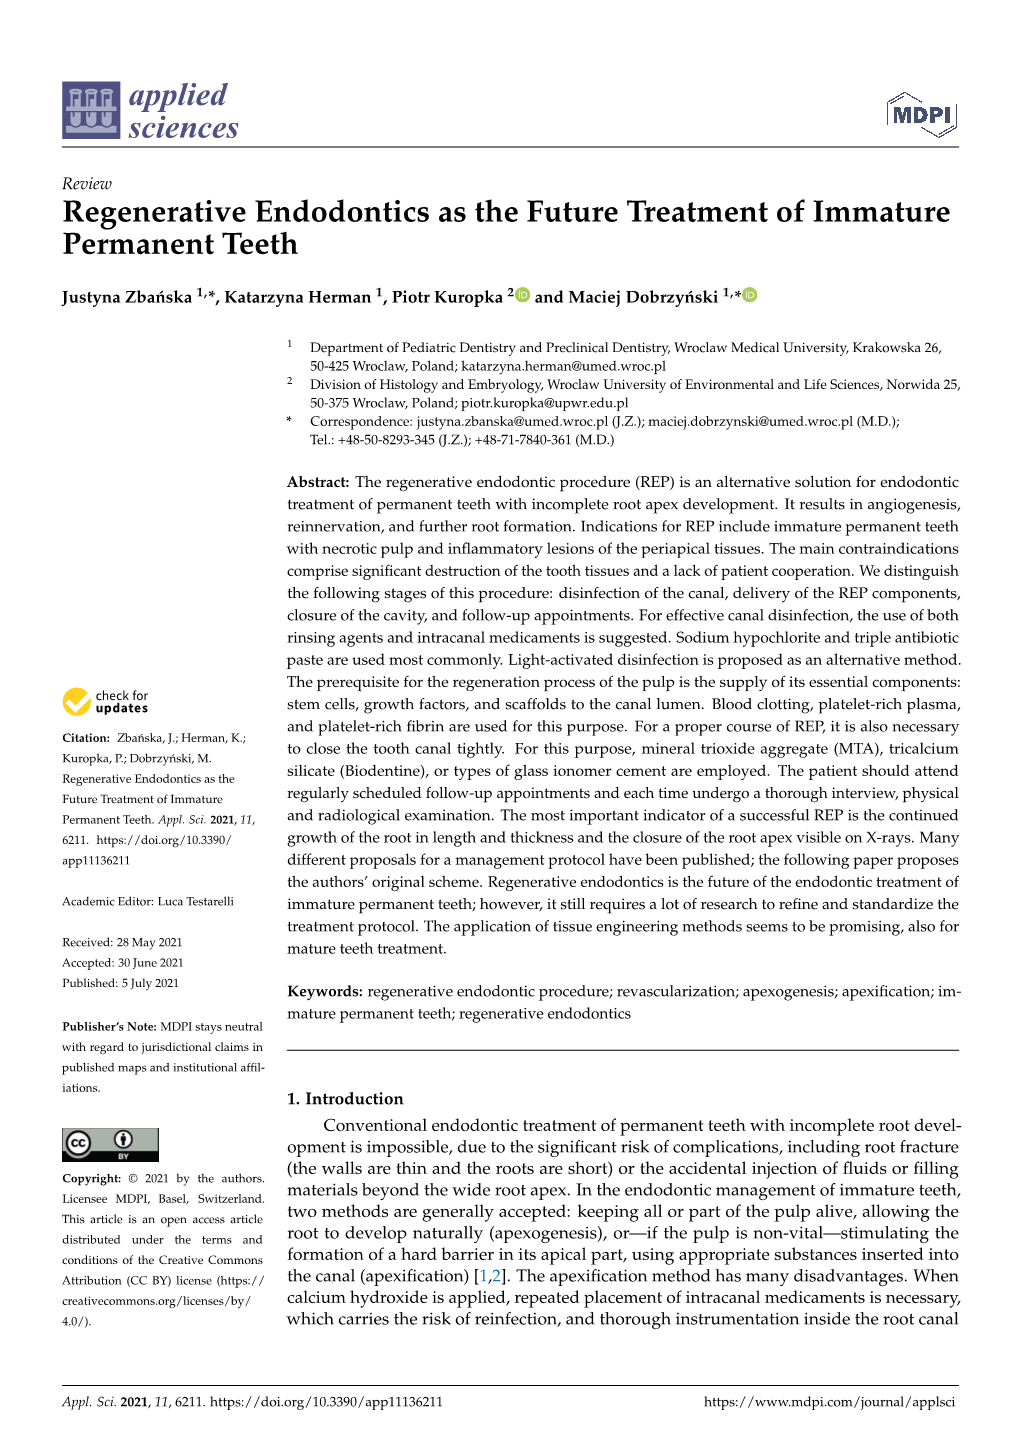 Regenerative Endodontics As the Future Treatment of Immature Permanent Teeth